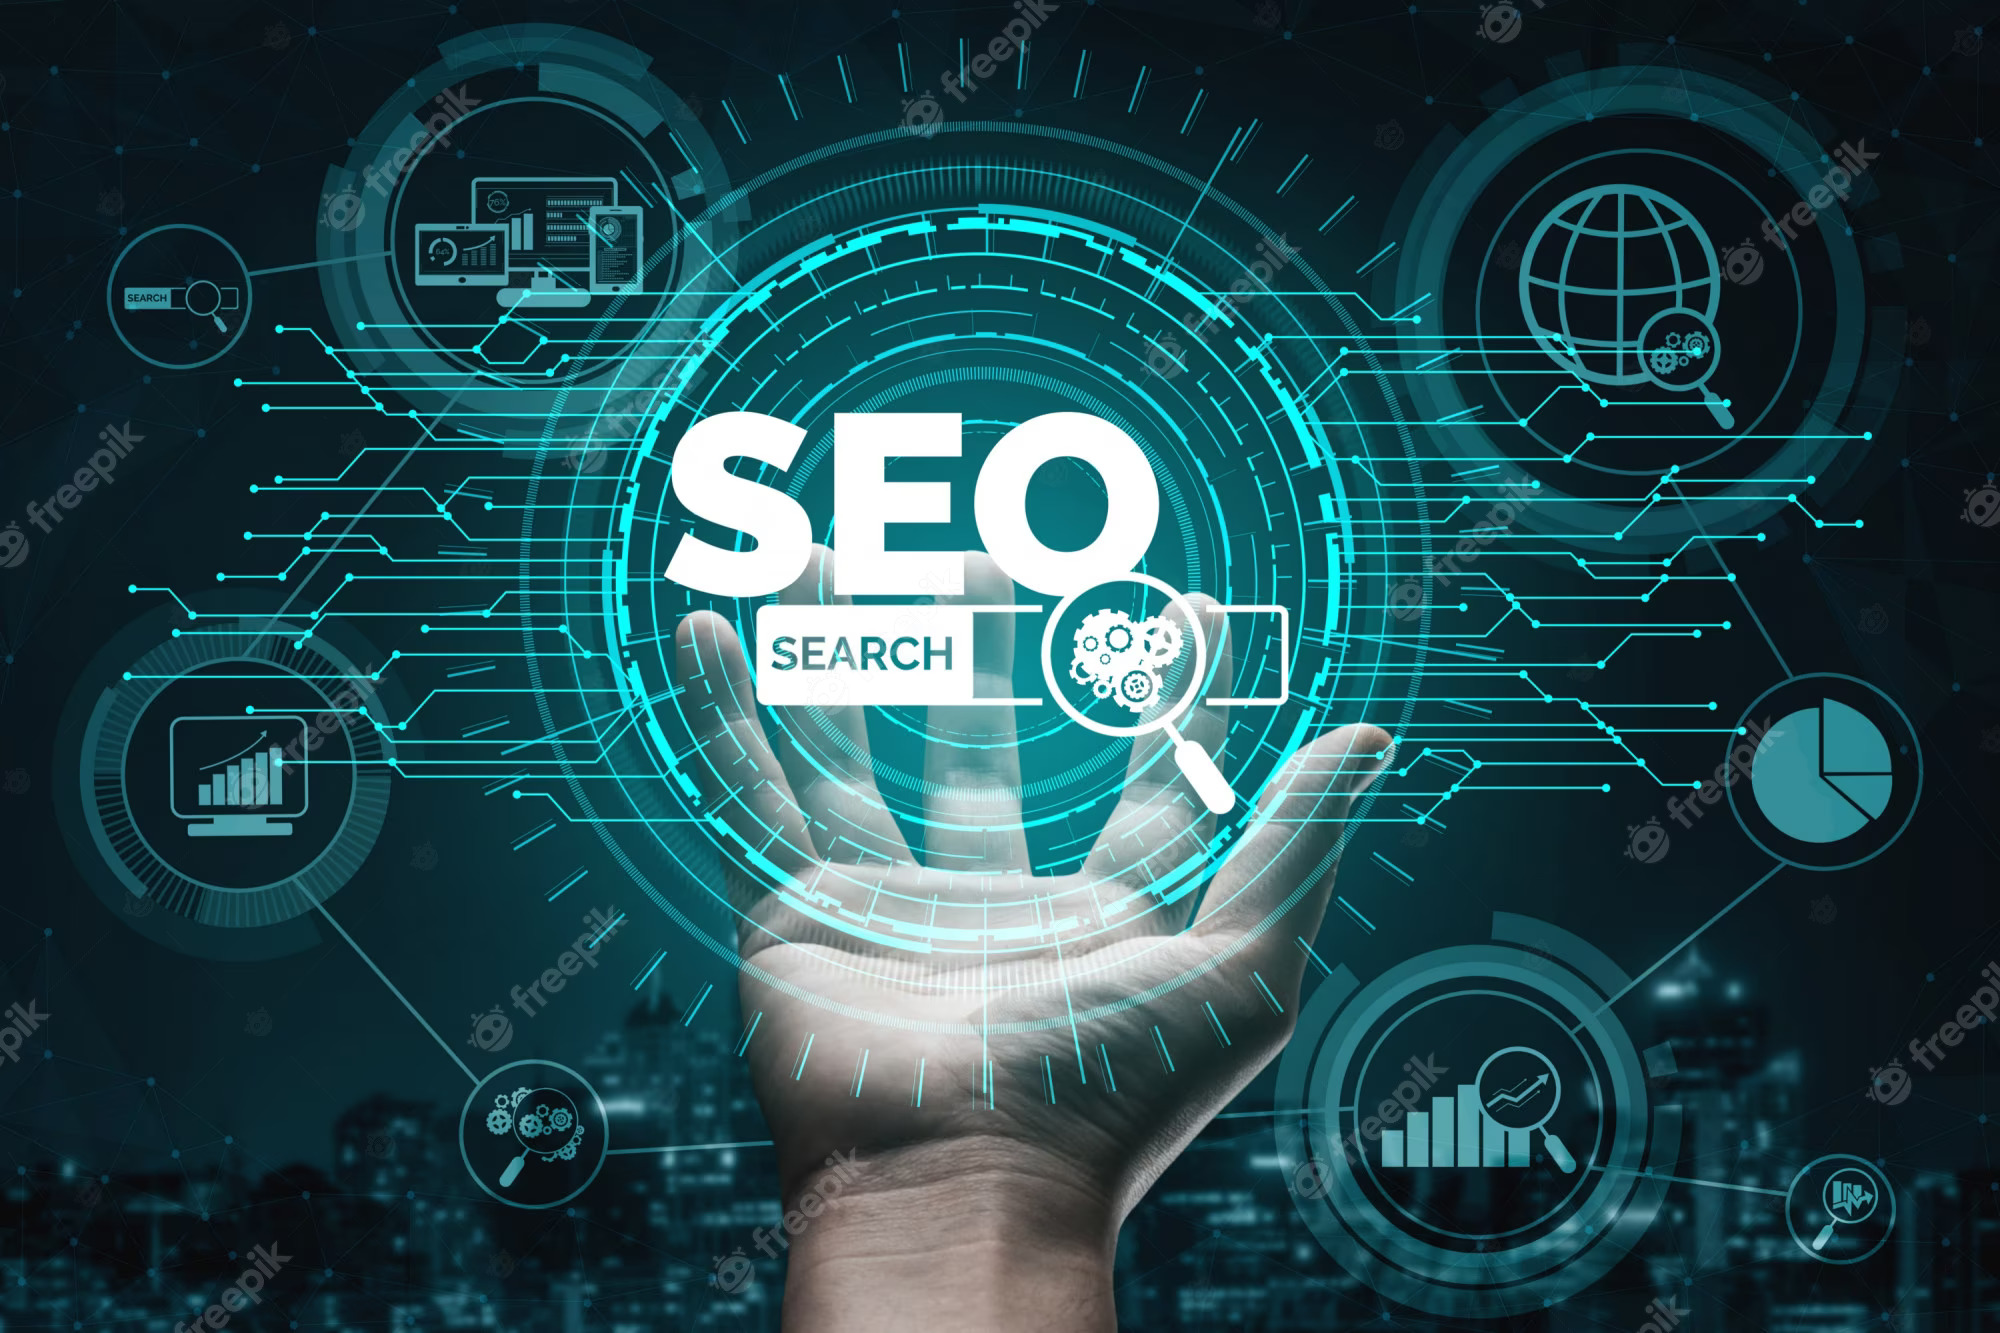 Search Engine Optimization (SEO):